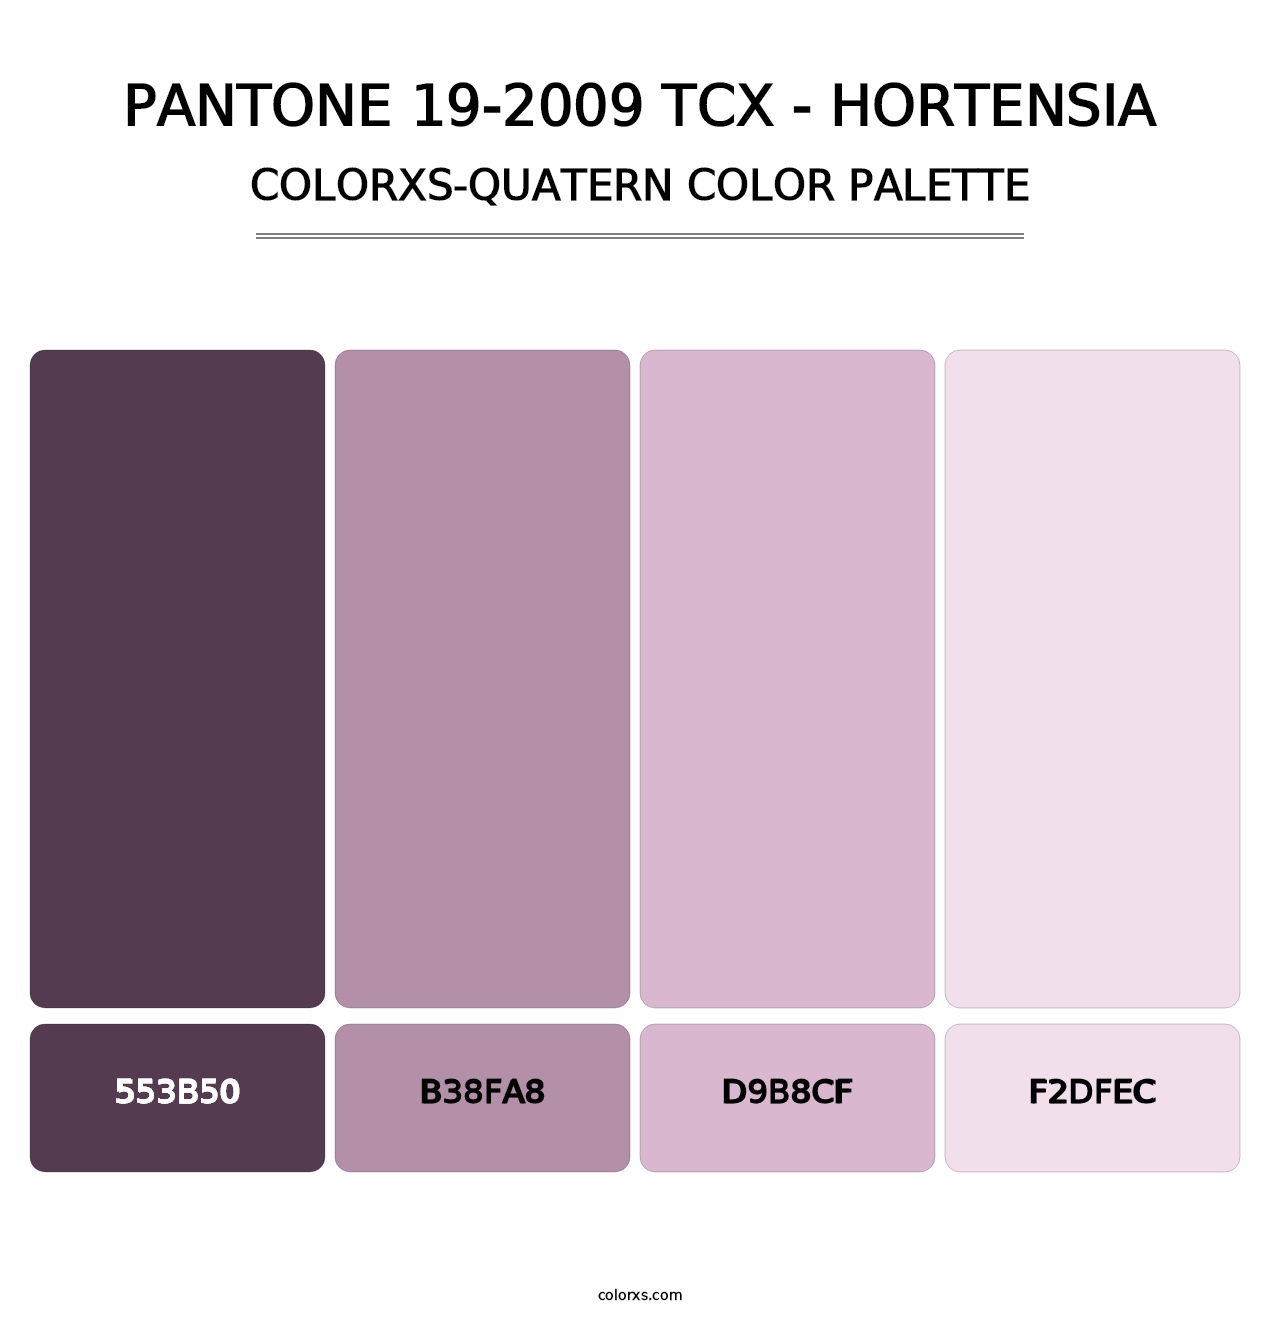 PANTONE 19-2009 TCX - Hortensia - Colorxs Quatern Palette